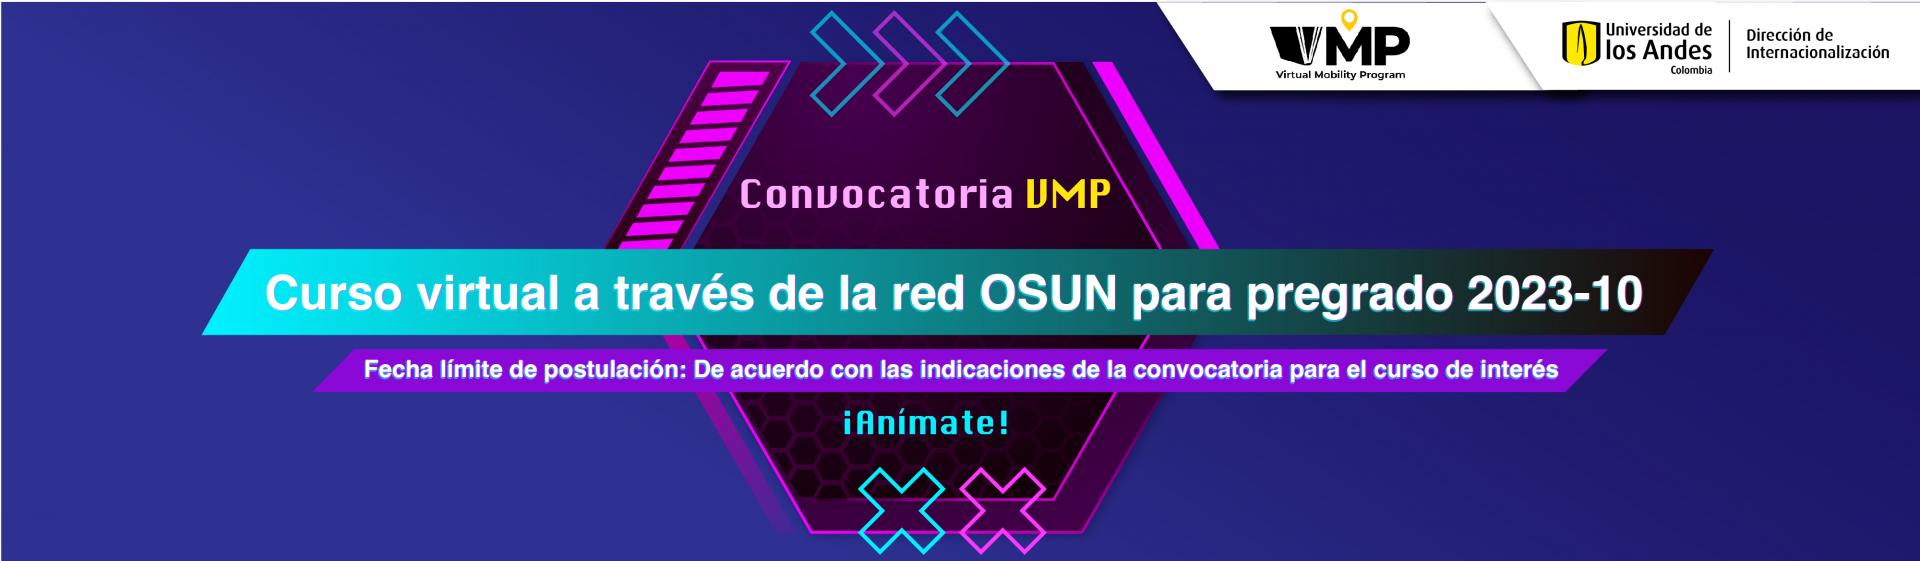 Convocatoria VMP curso virtual de la red OSUN para pregrado 2023-10